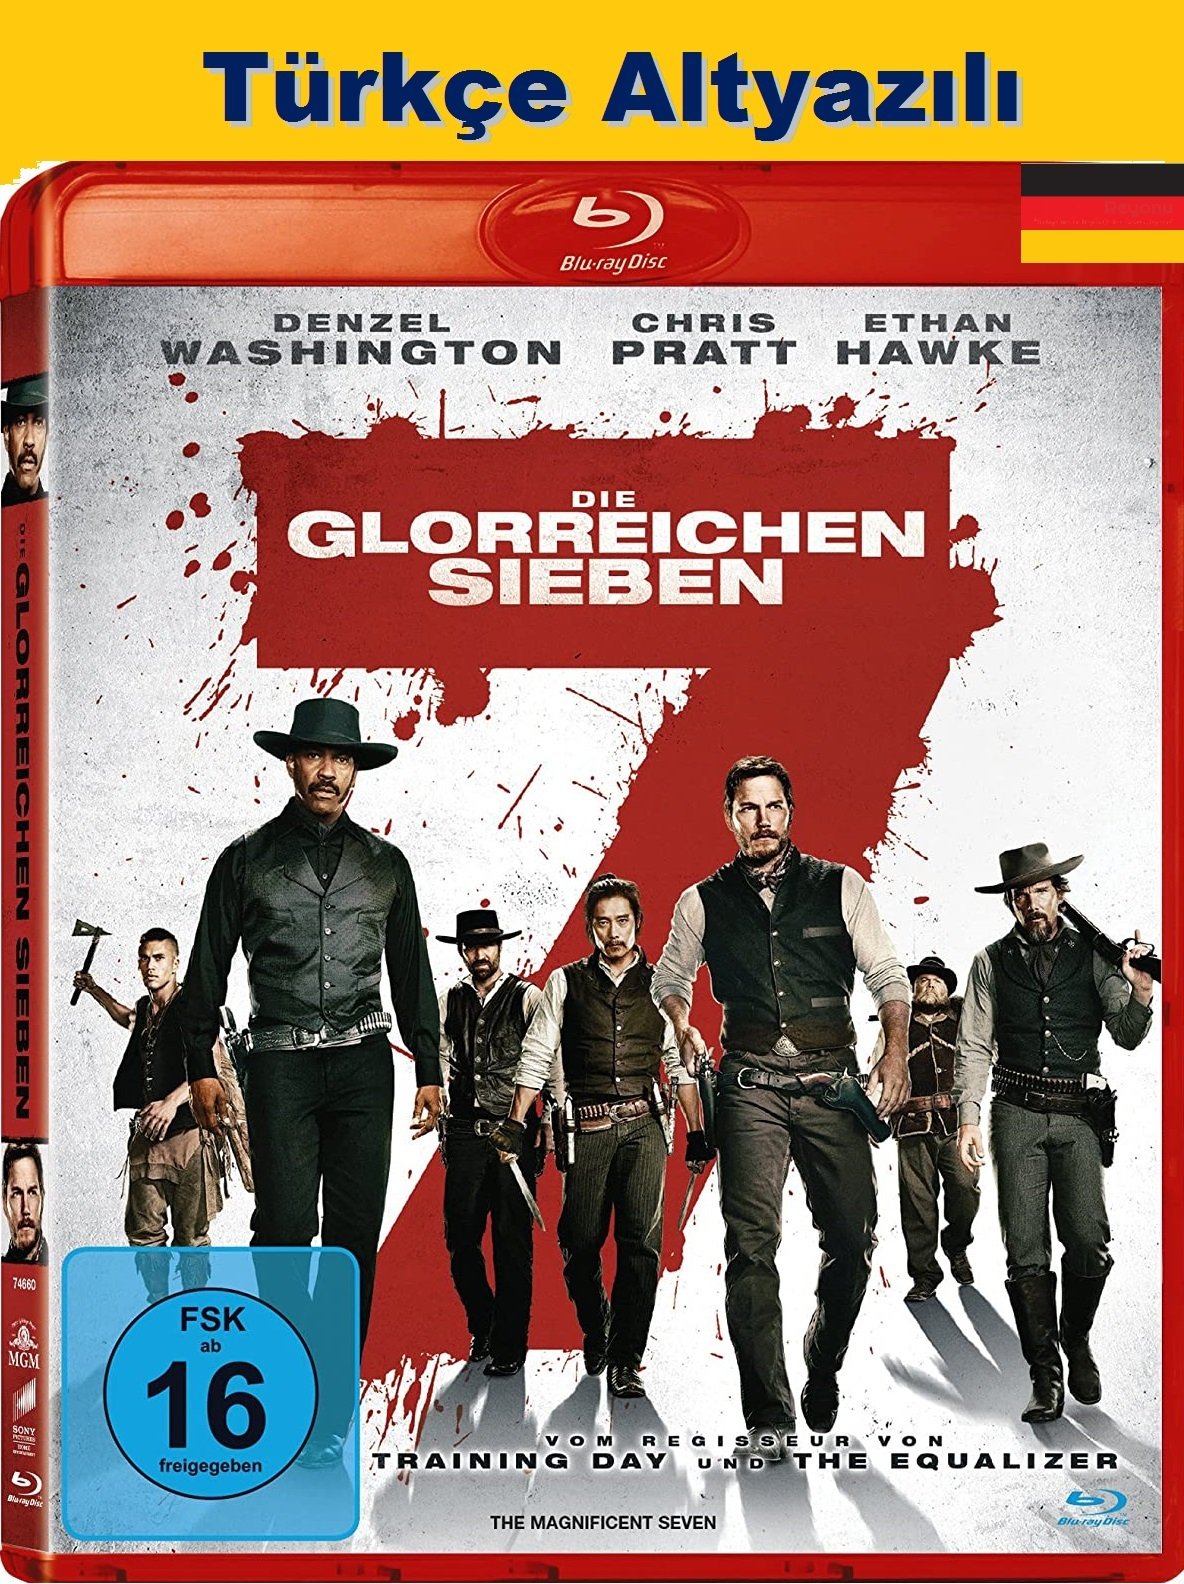 The Magnificent Seven - Muhteşem Yedili Blu-Ray